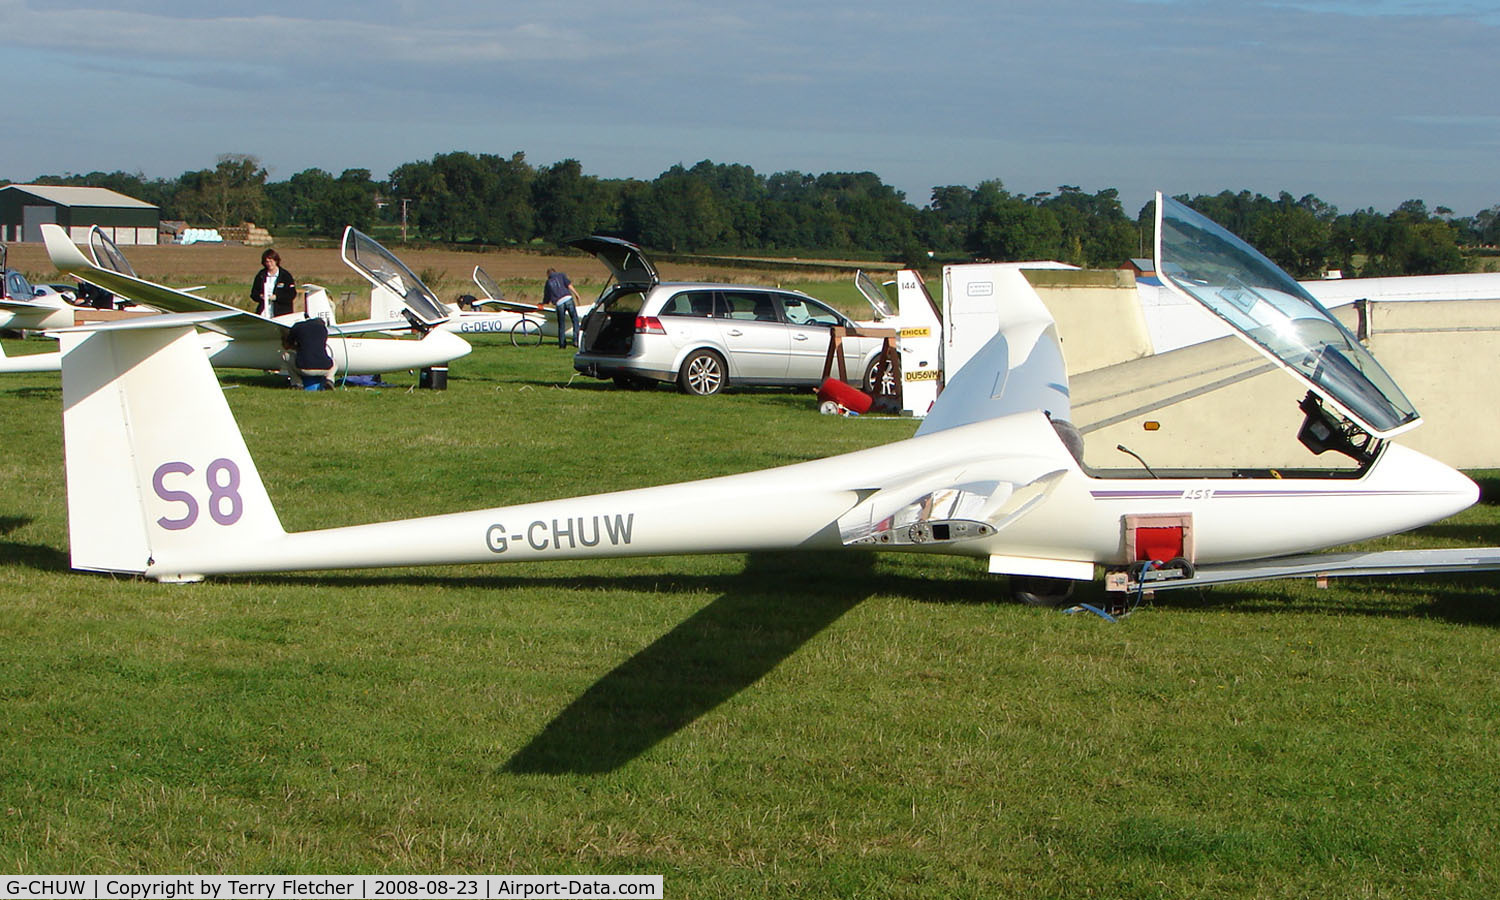 G-CHUW, 1996 Rolladen-Schneider LS-8-18 C/N 8058, Competitor in the Midland Regional Gliding Championship at Husband's Bosworth